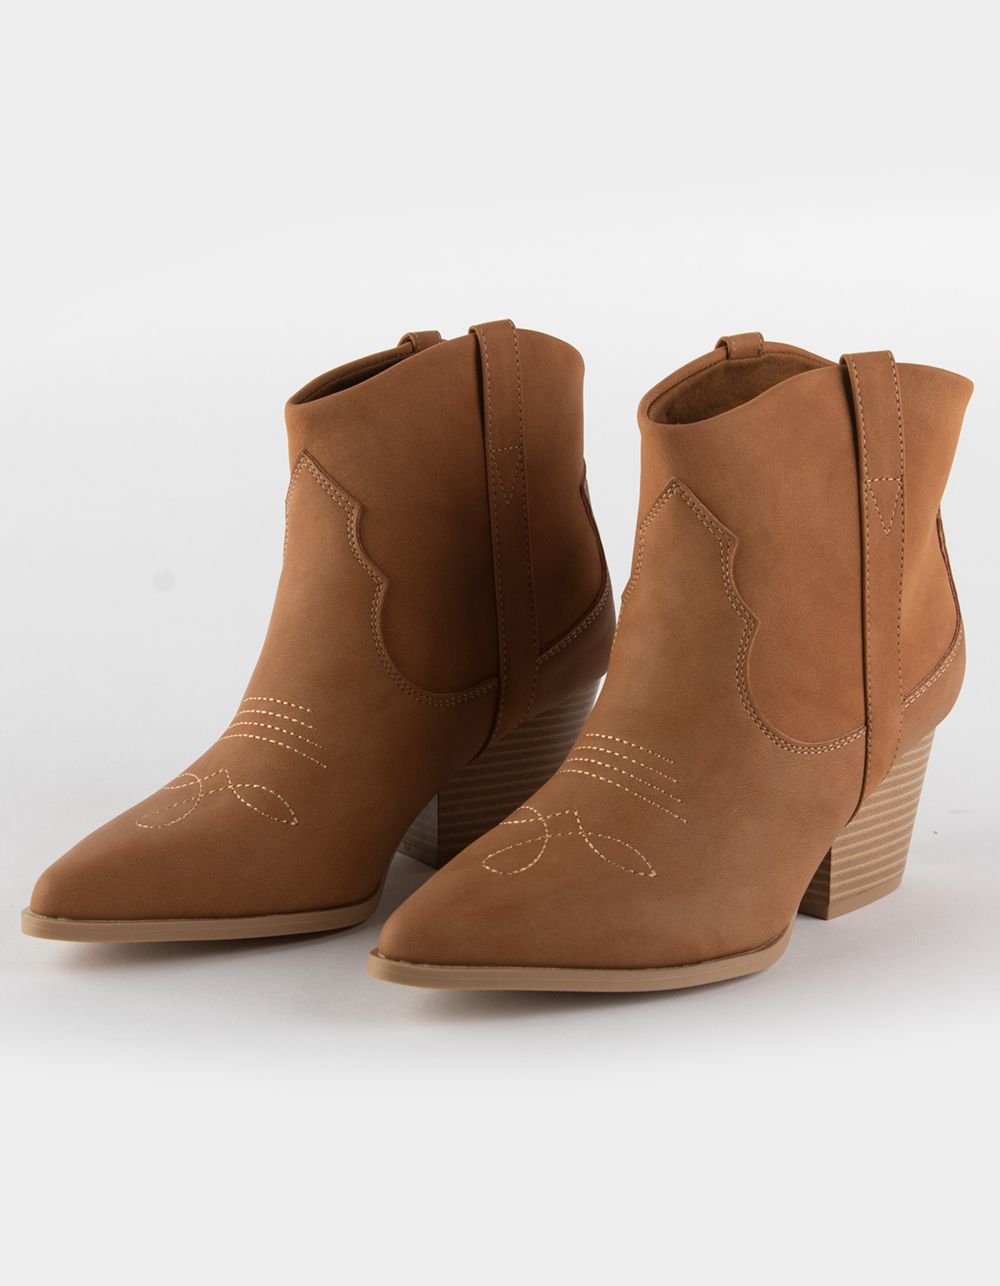 QUPID Vaca Womens Western Boots - CAMEL | Tillys | Tillys